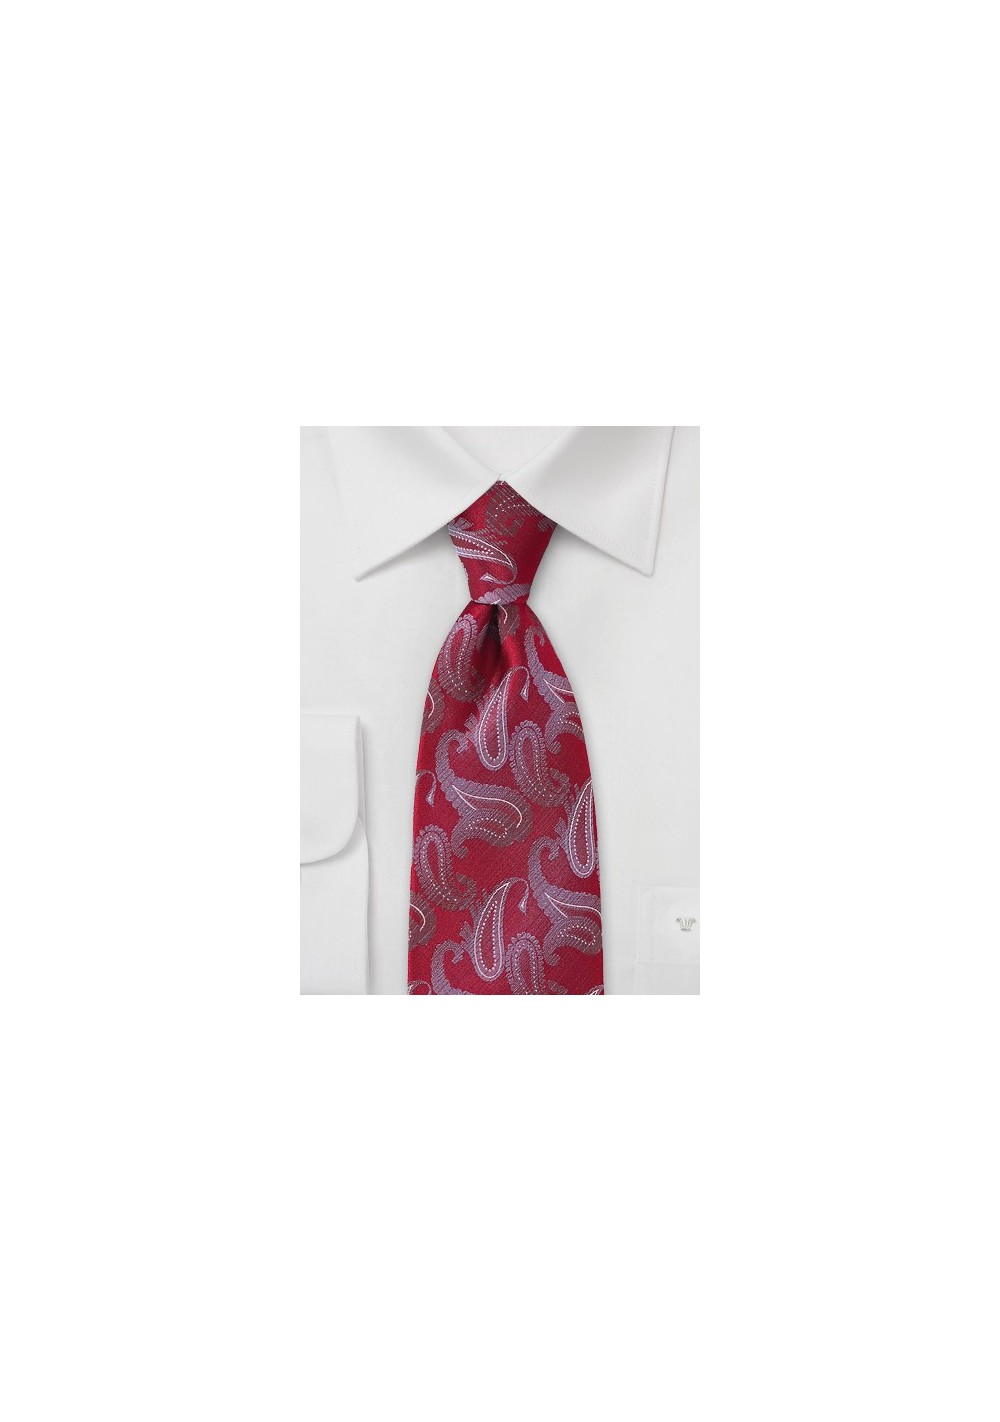 Paisley Tie in Cranberry